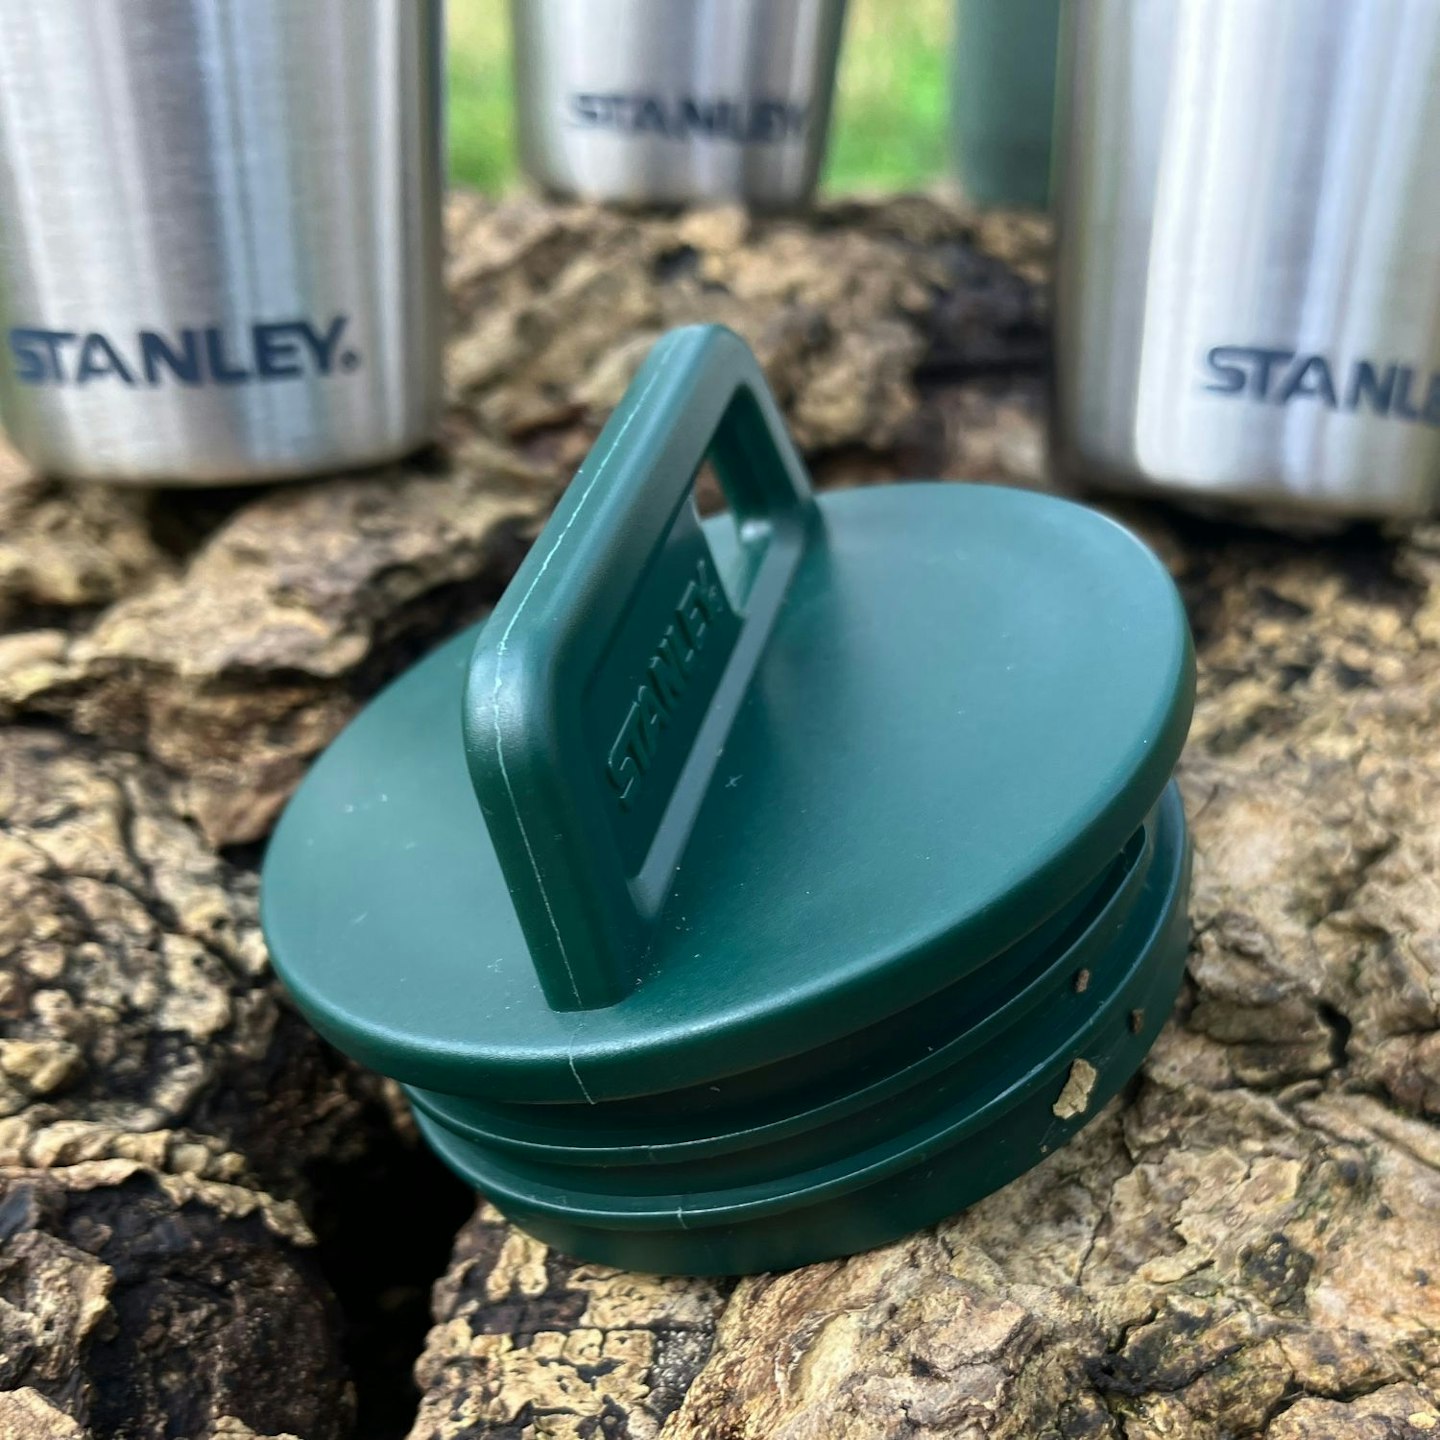 Stanley Adventure Nesting Shot Glass Set lid